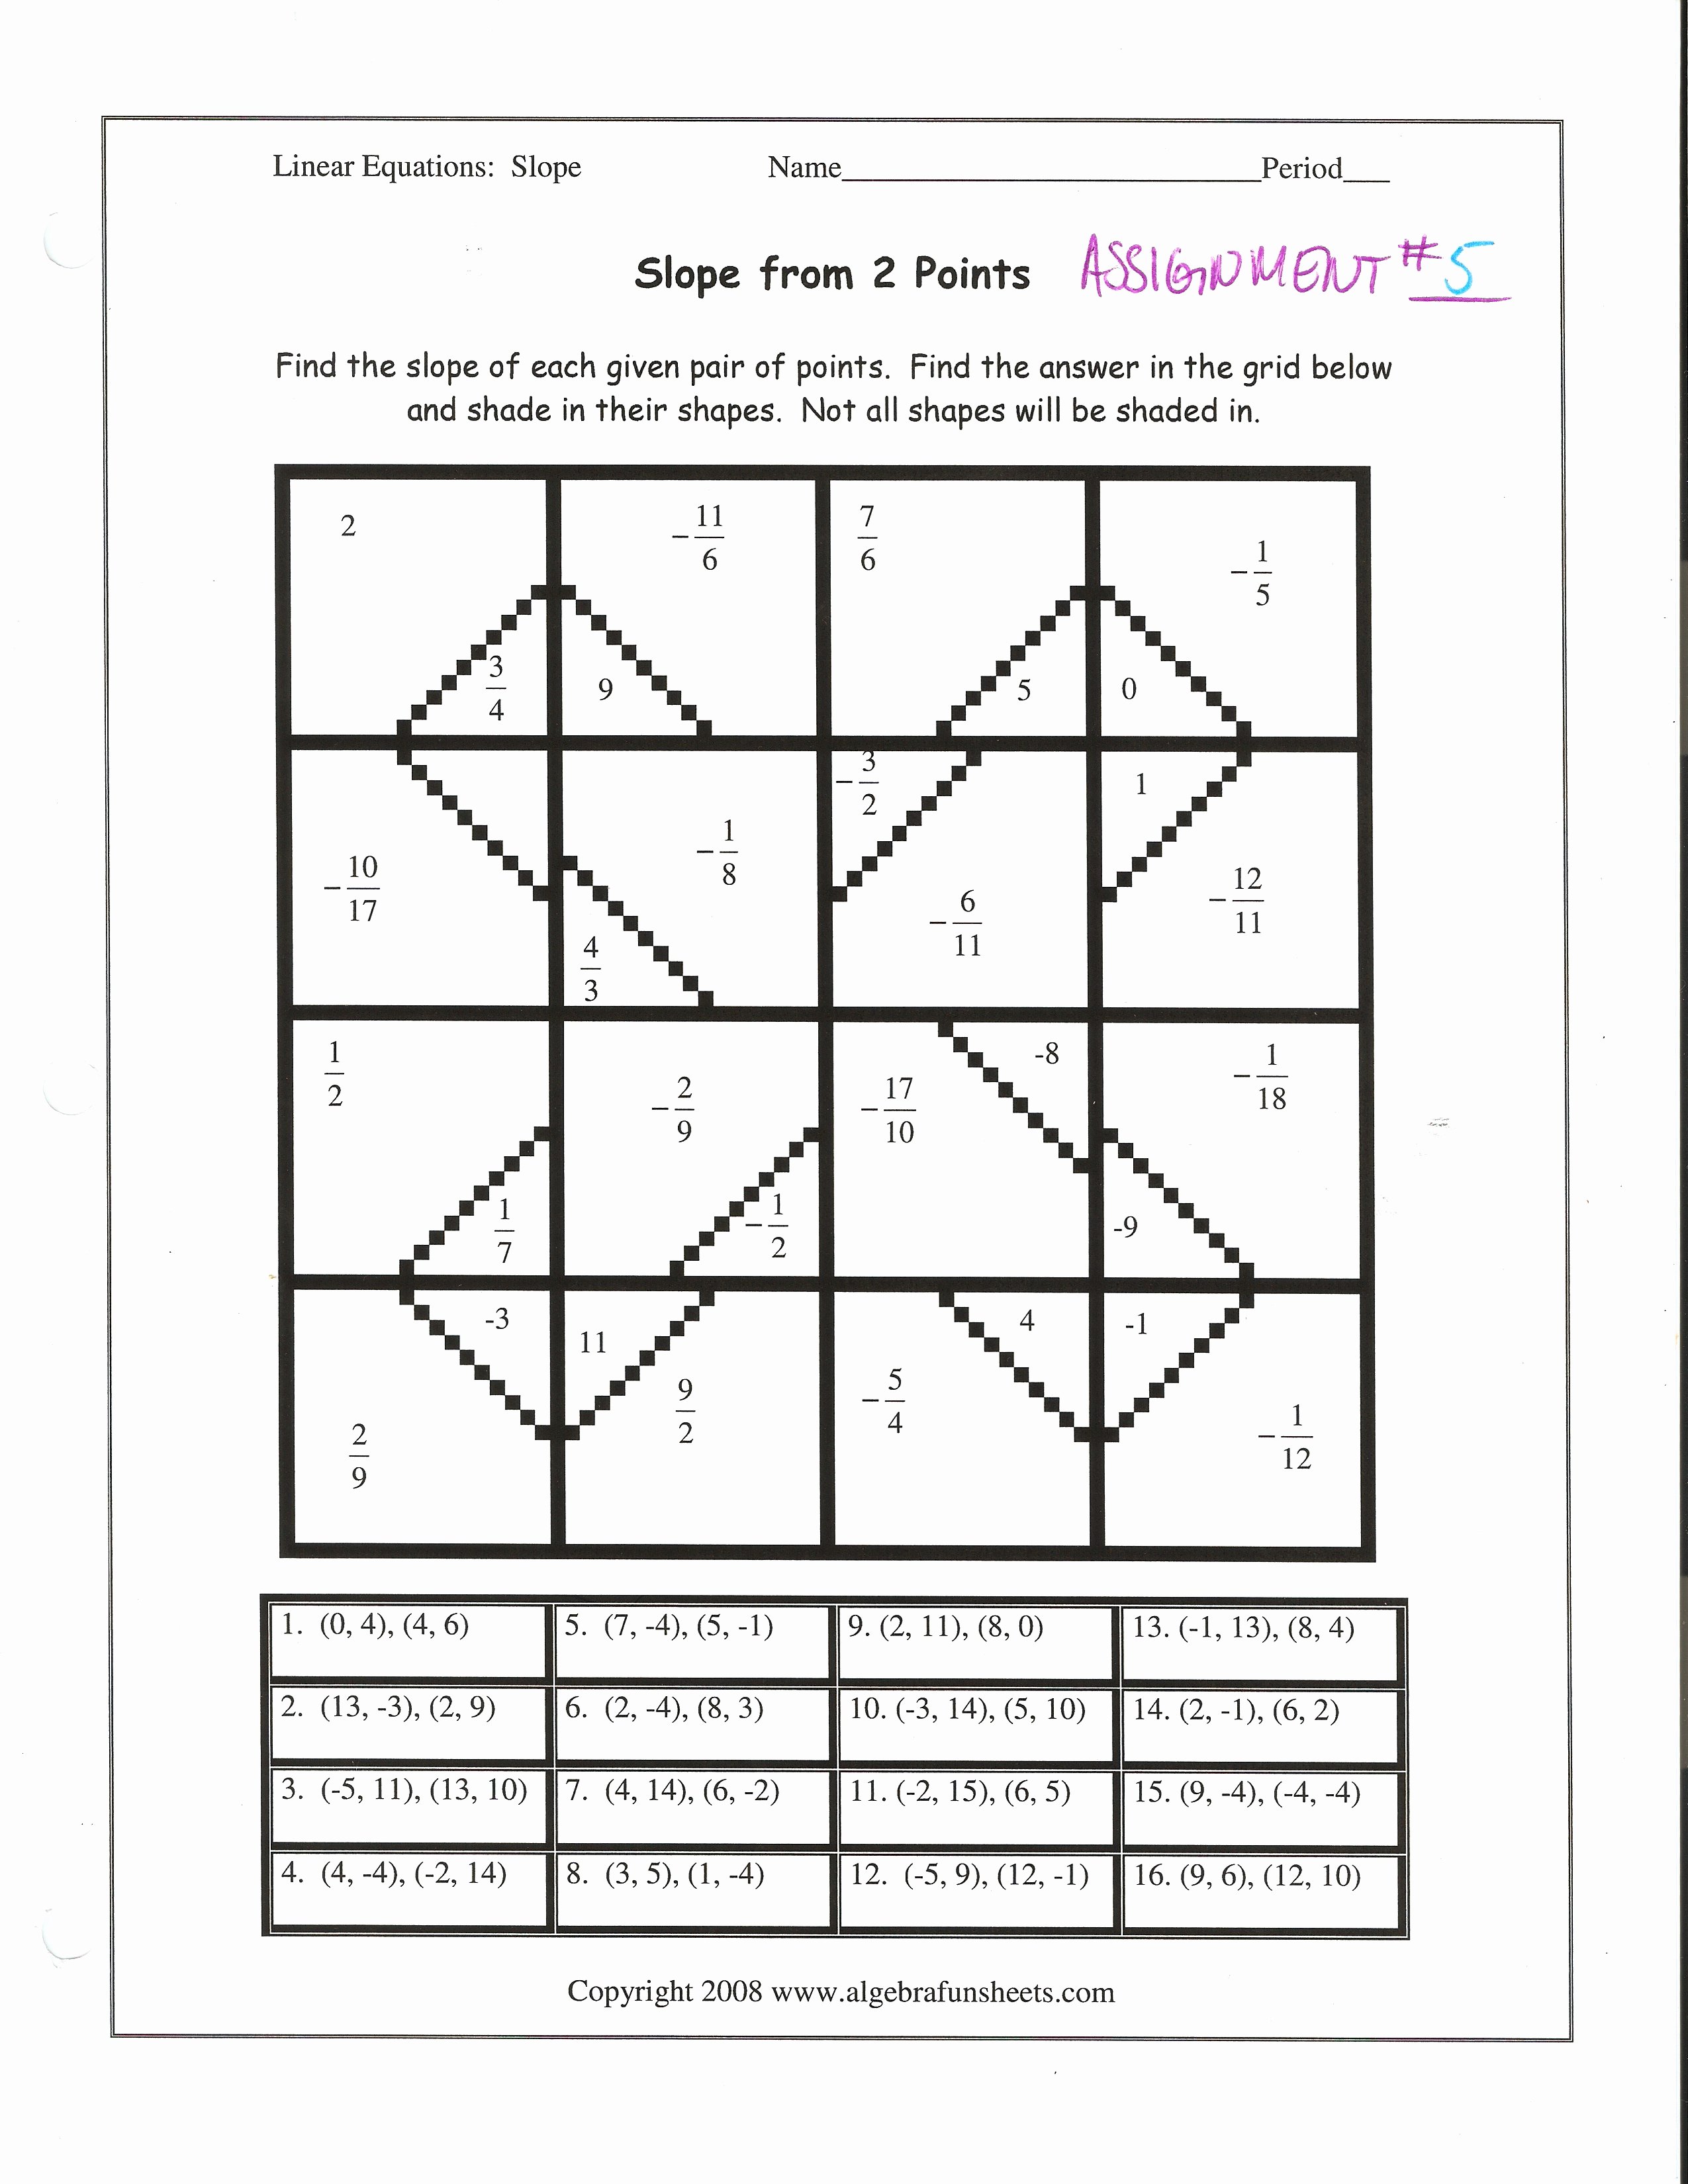 Writing Equations From Graphs Worksheet New Finding Slope formula Worksheet